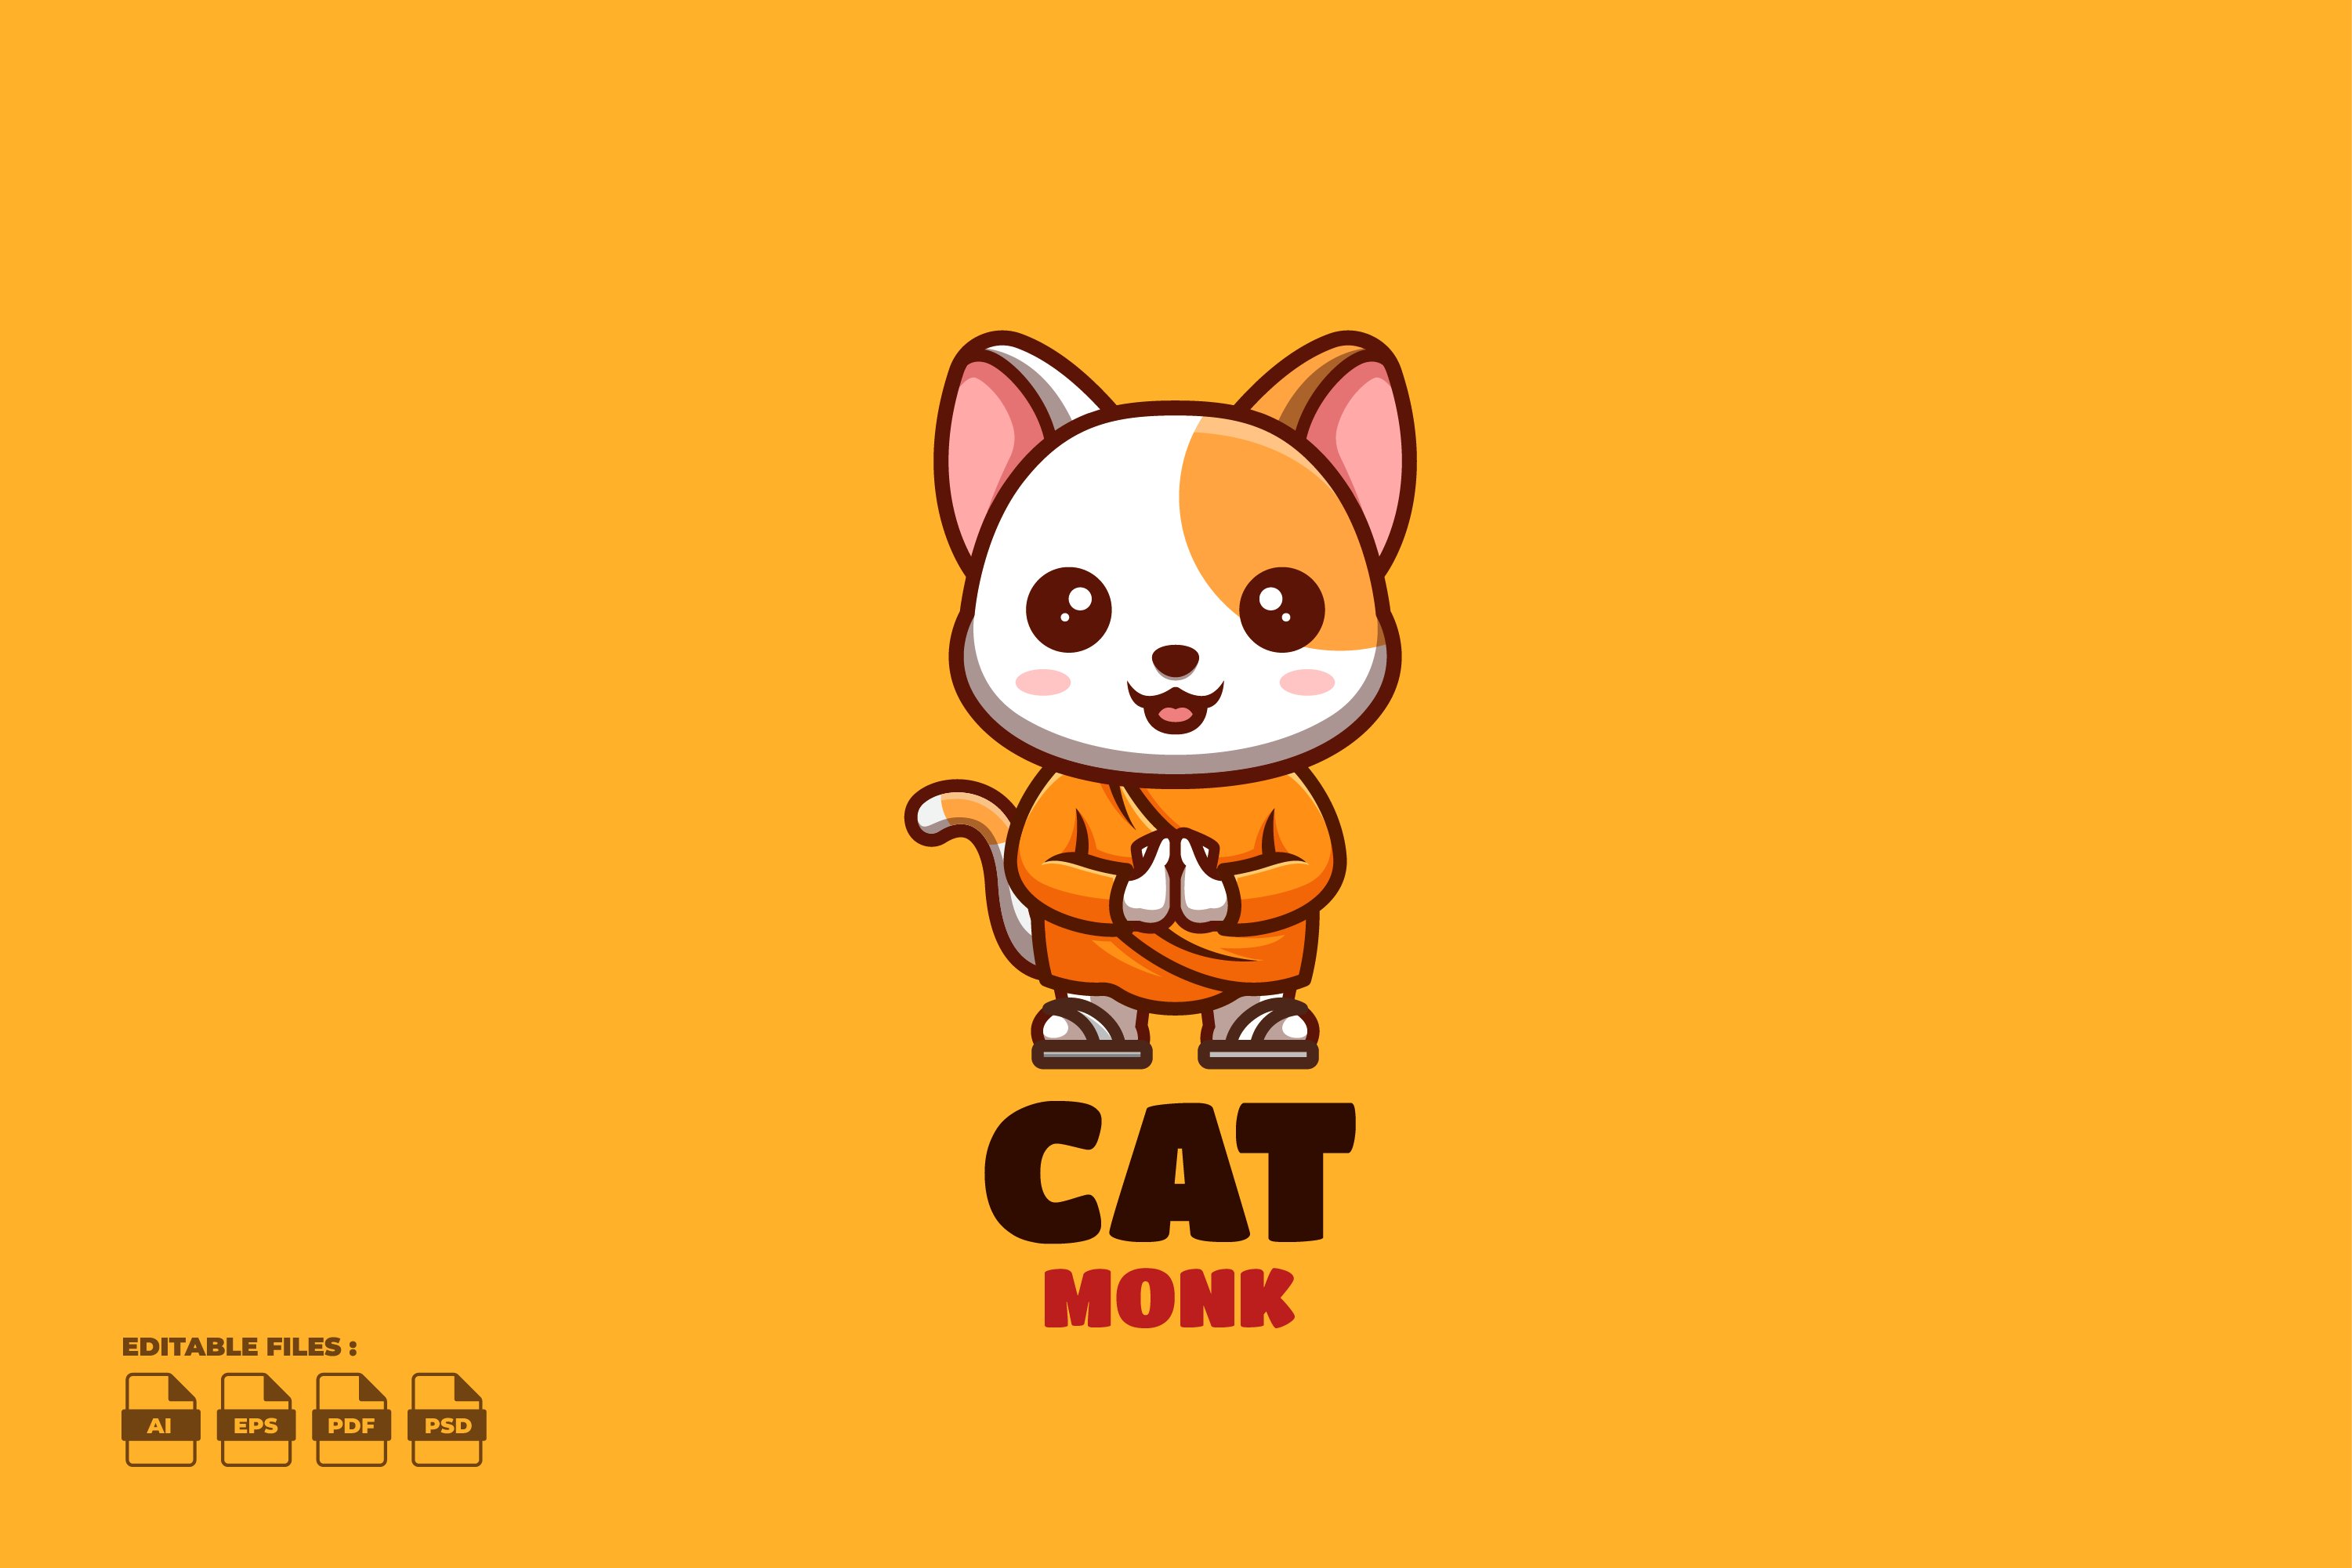 Monk White Cat Cute Mascot Logo cover image.